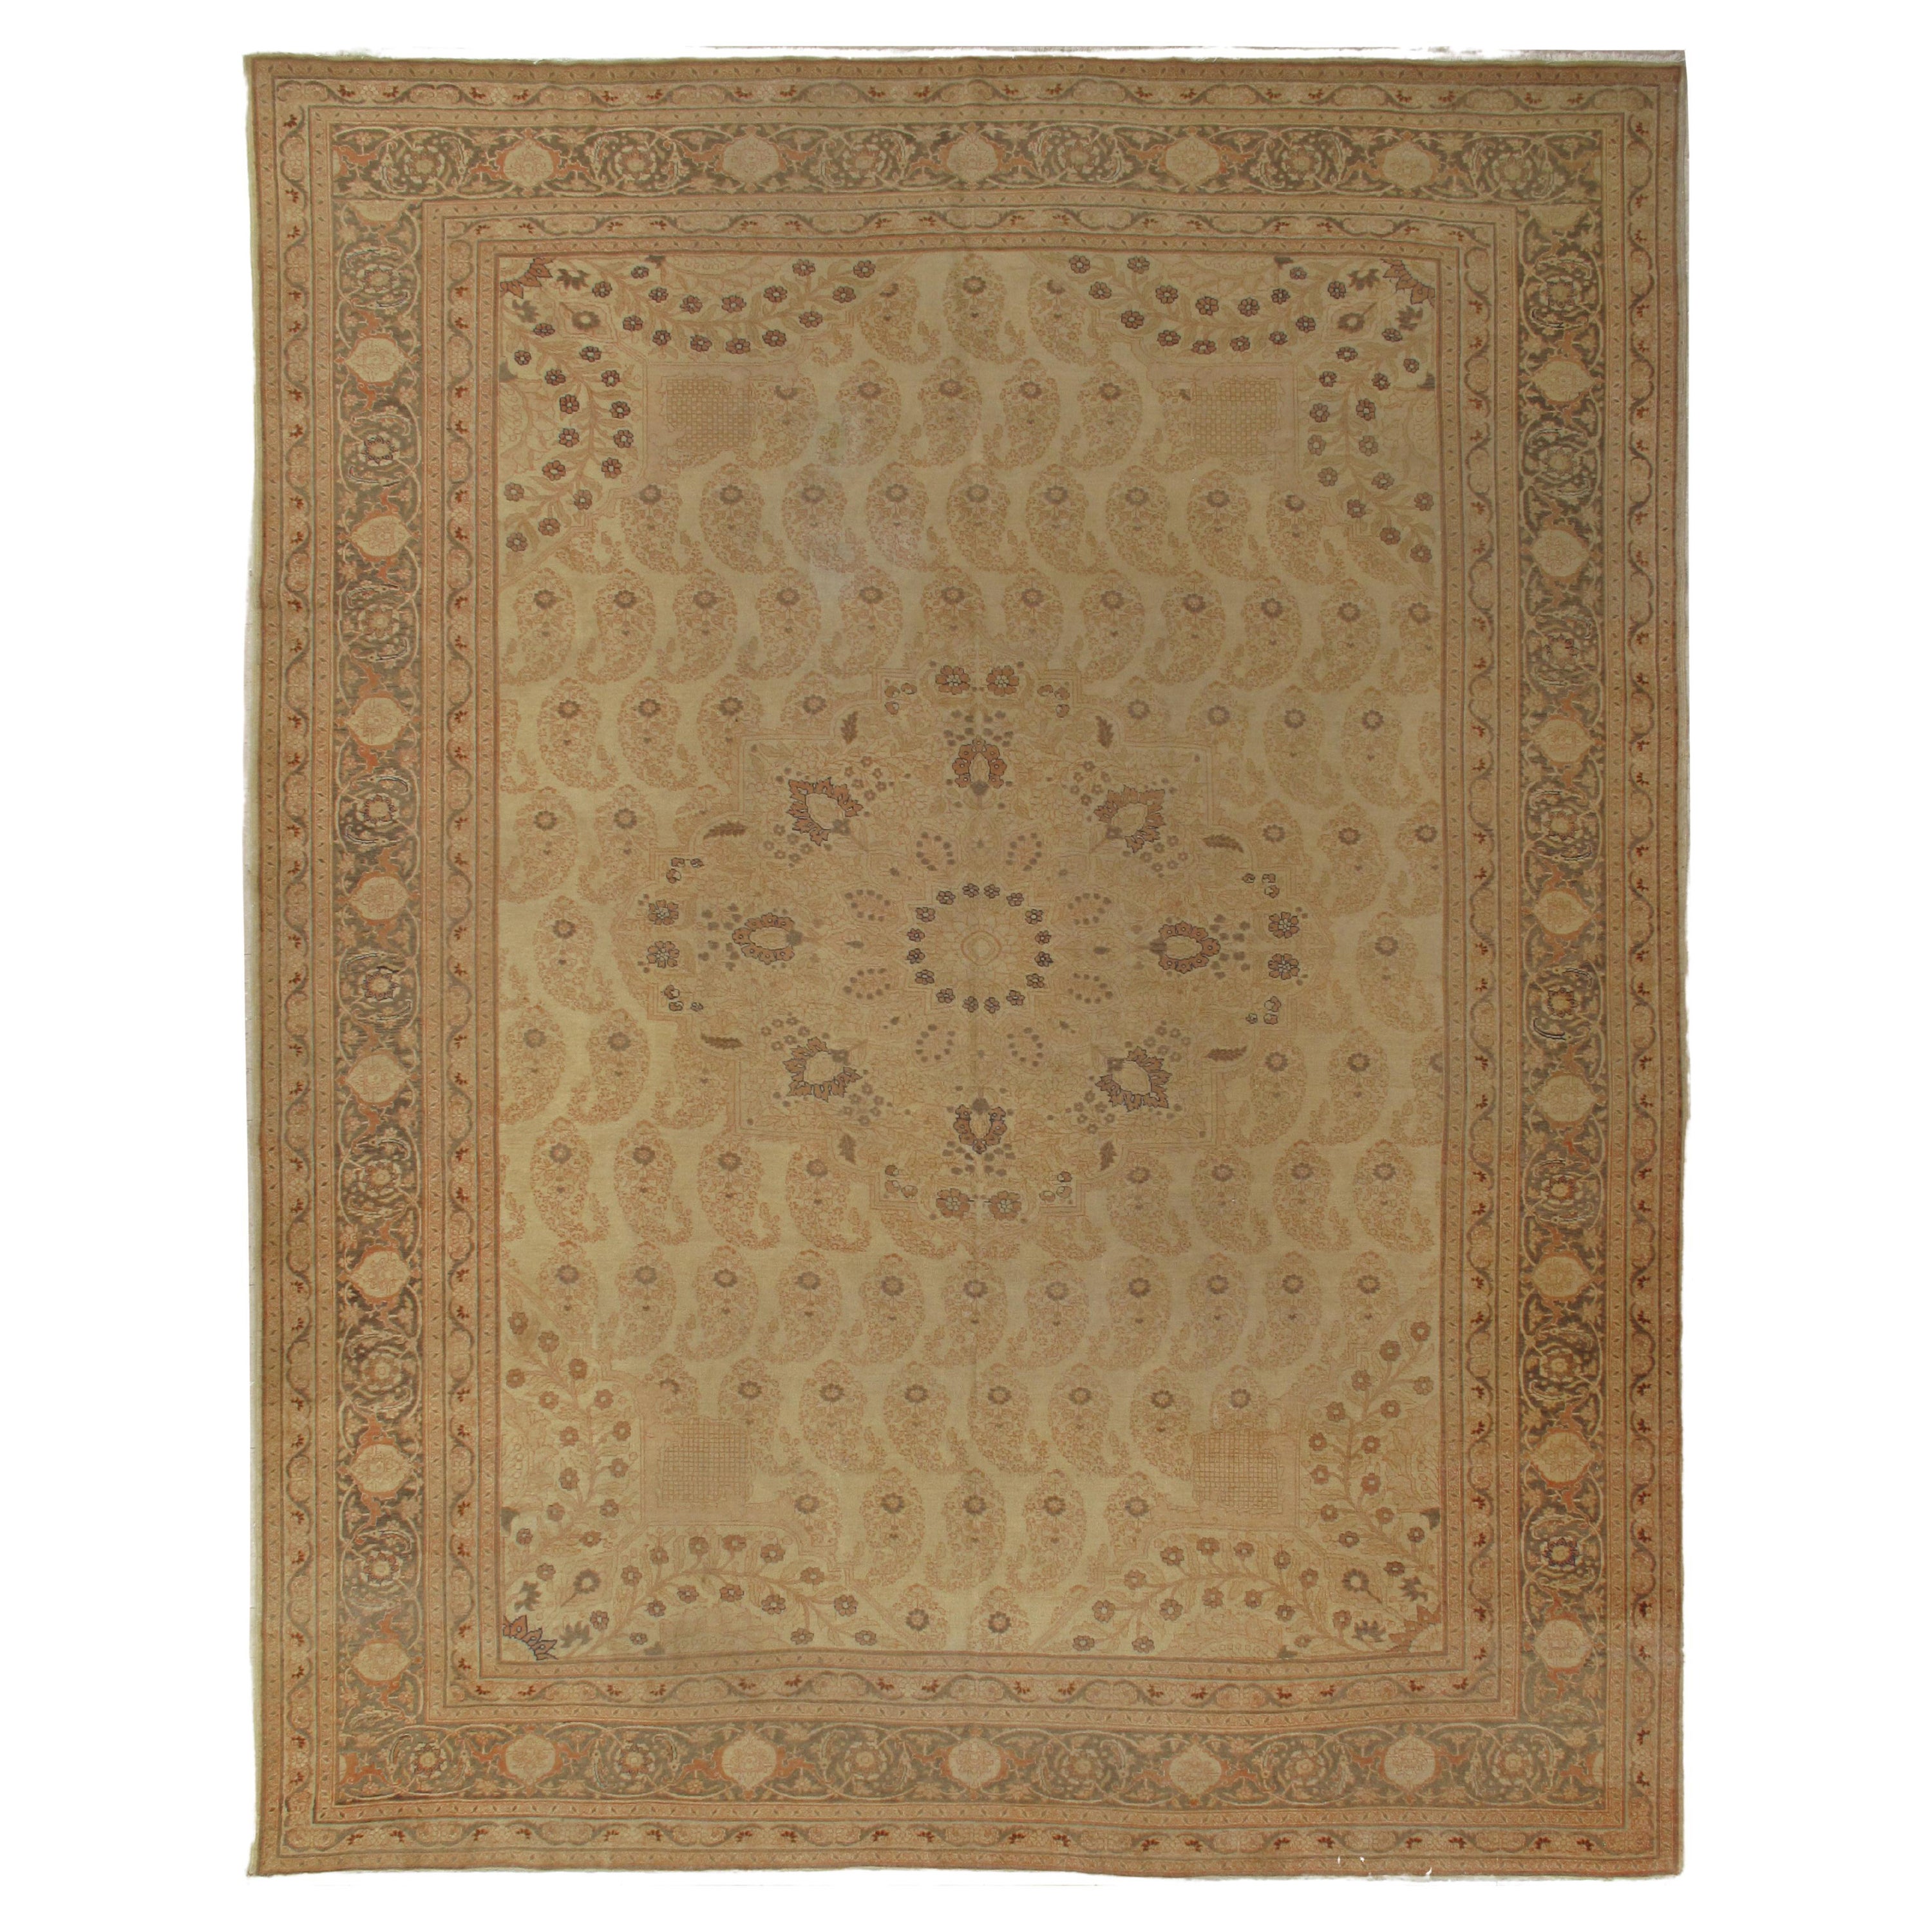 Antique Tabriz Carpet, Hadji Jalili Persian Rug, Earth Tones, Ivory, Terracotta For Sale